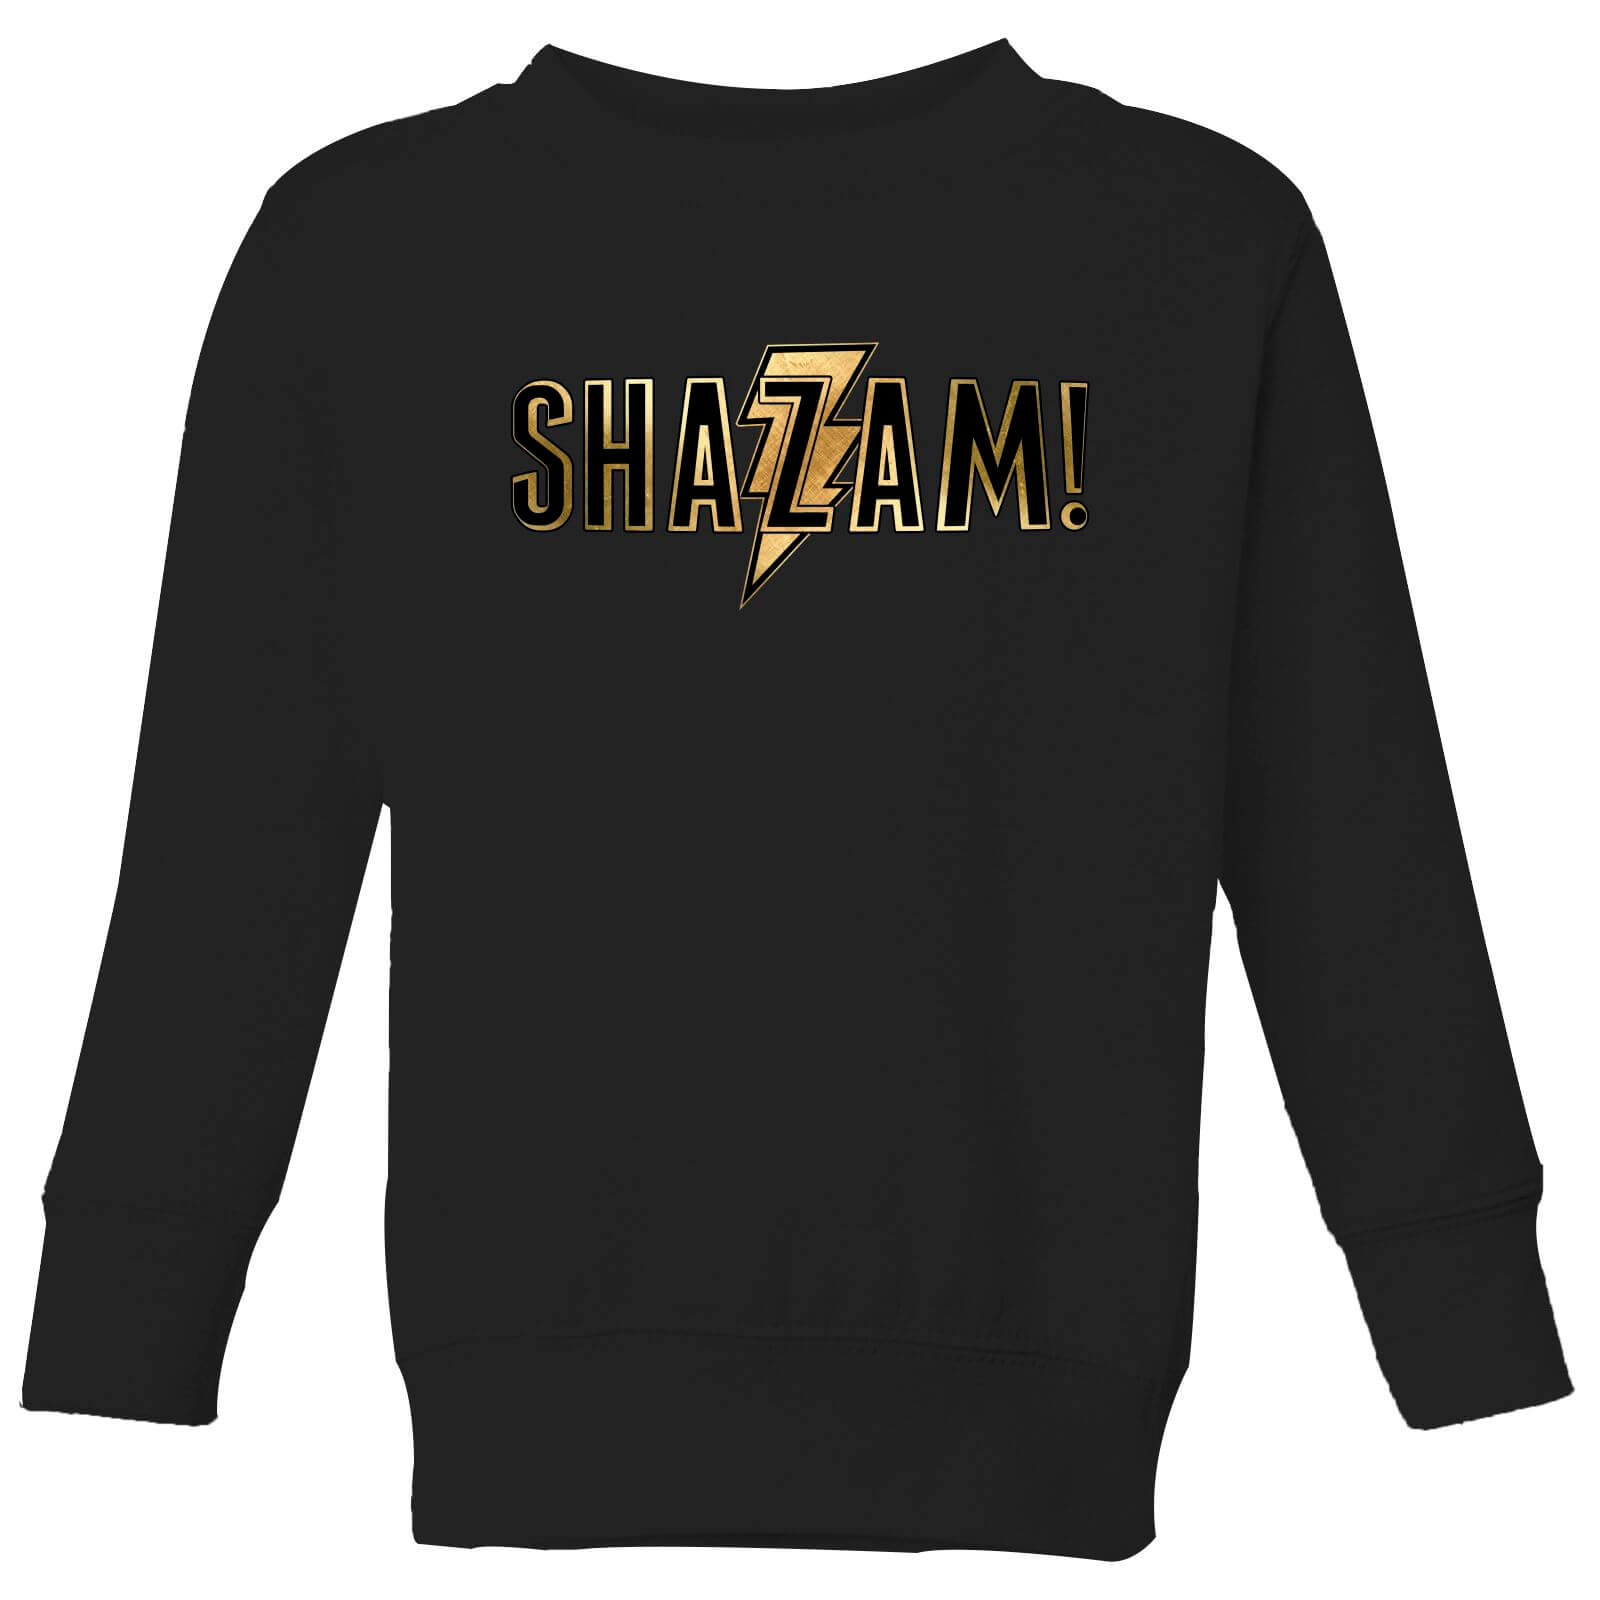 Dc Comics Shazam gold logo kids' sweatshirt - black - 7-8 years - black